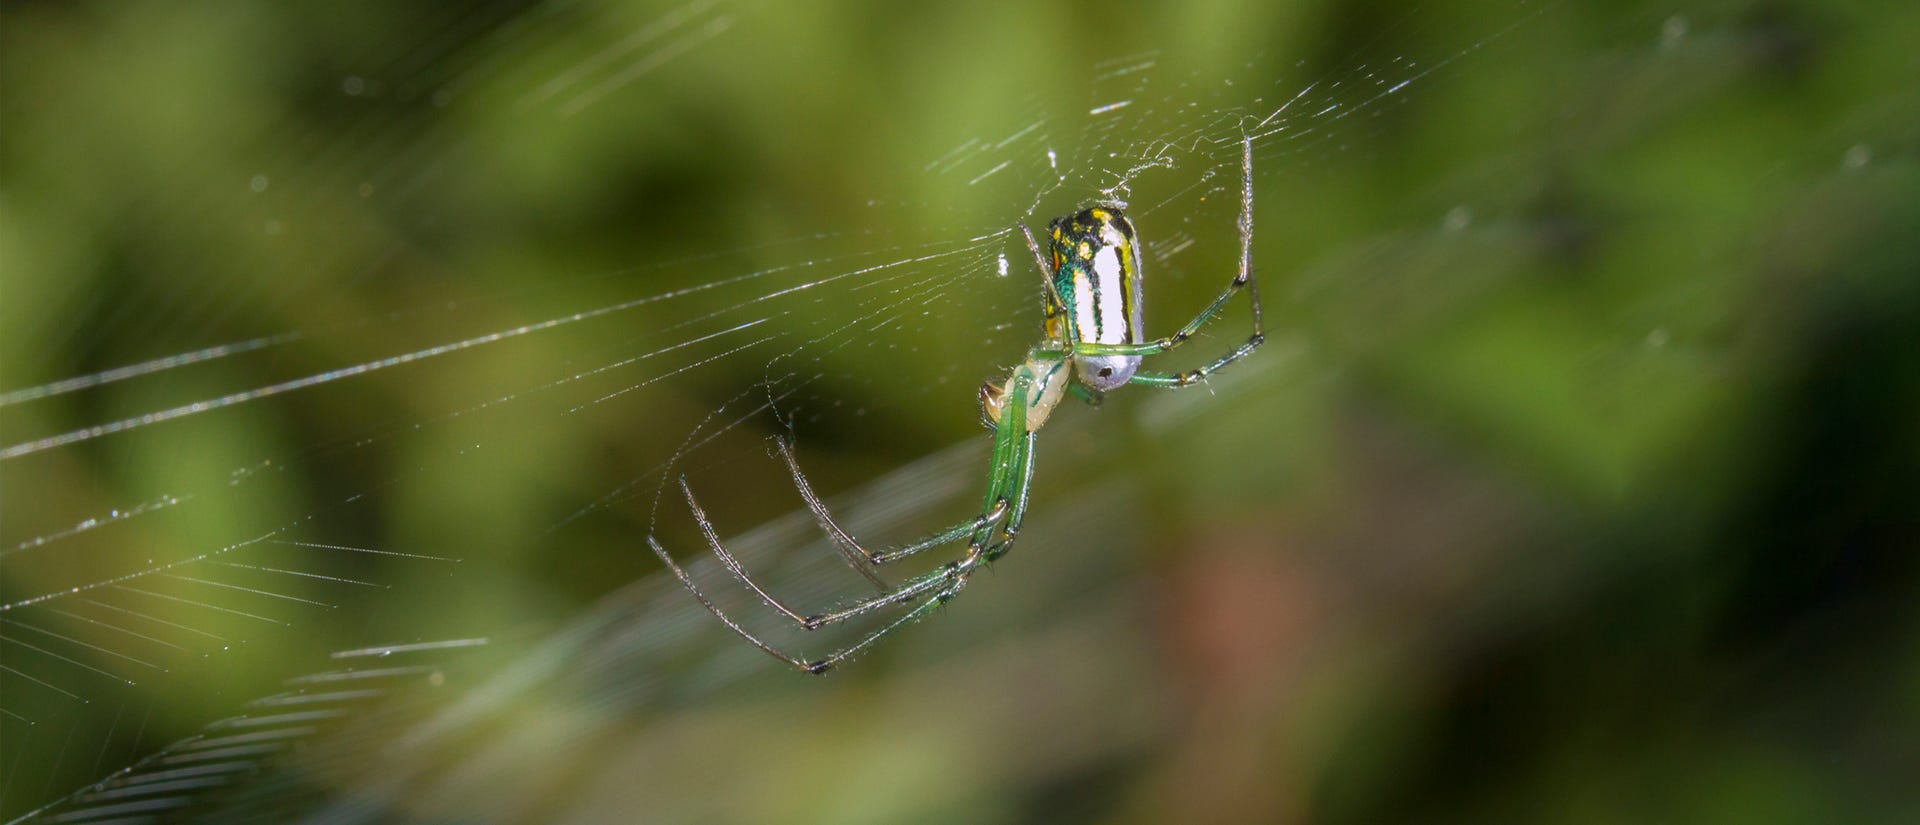 venusta orchard spider and web